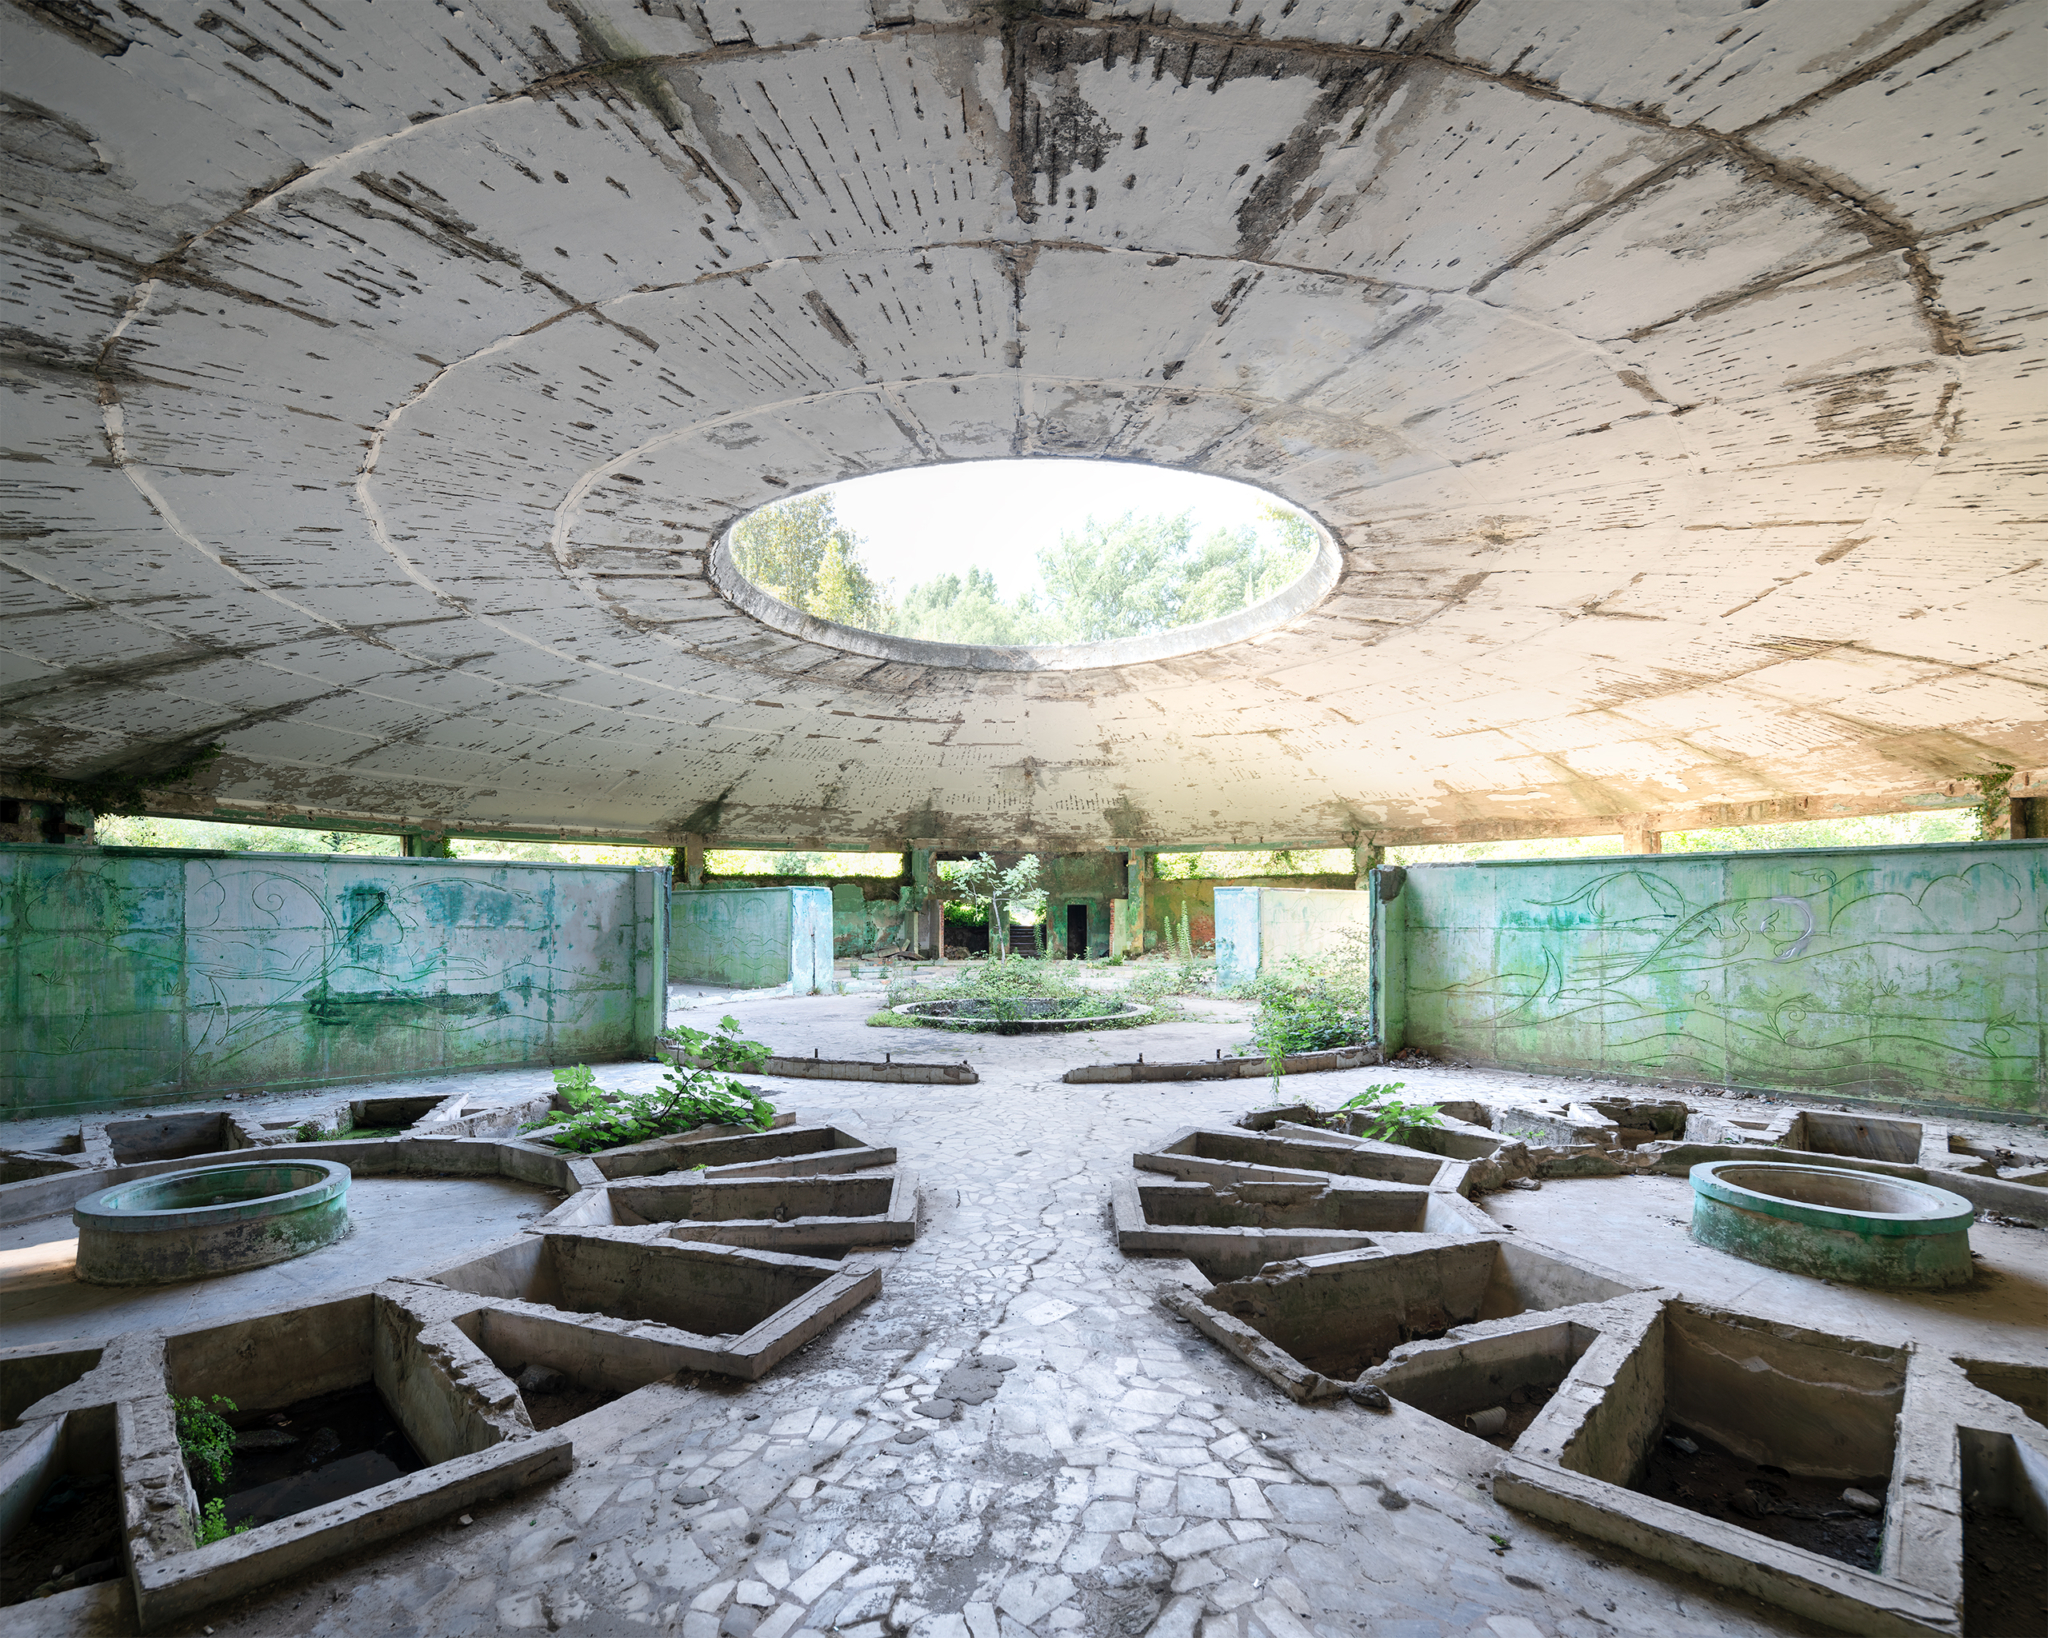 Abandoned baths number 8 inside the city of tskaltubo in Georgia